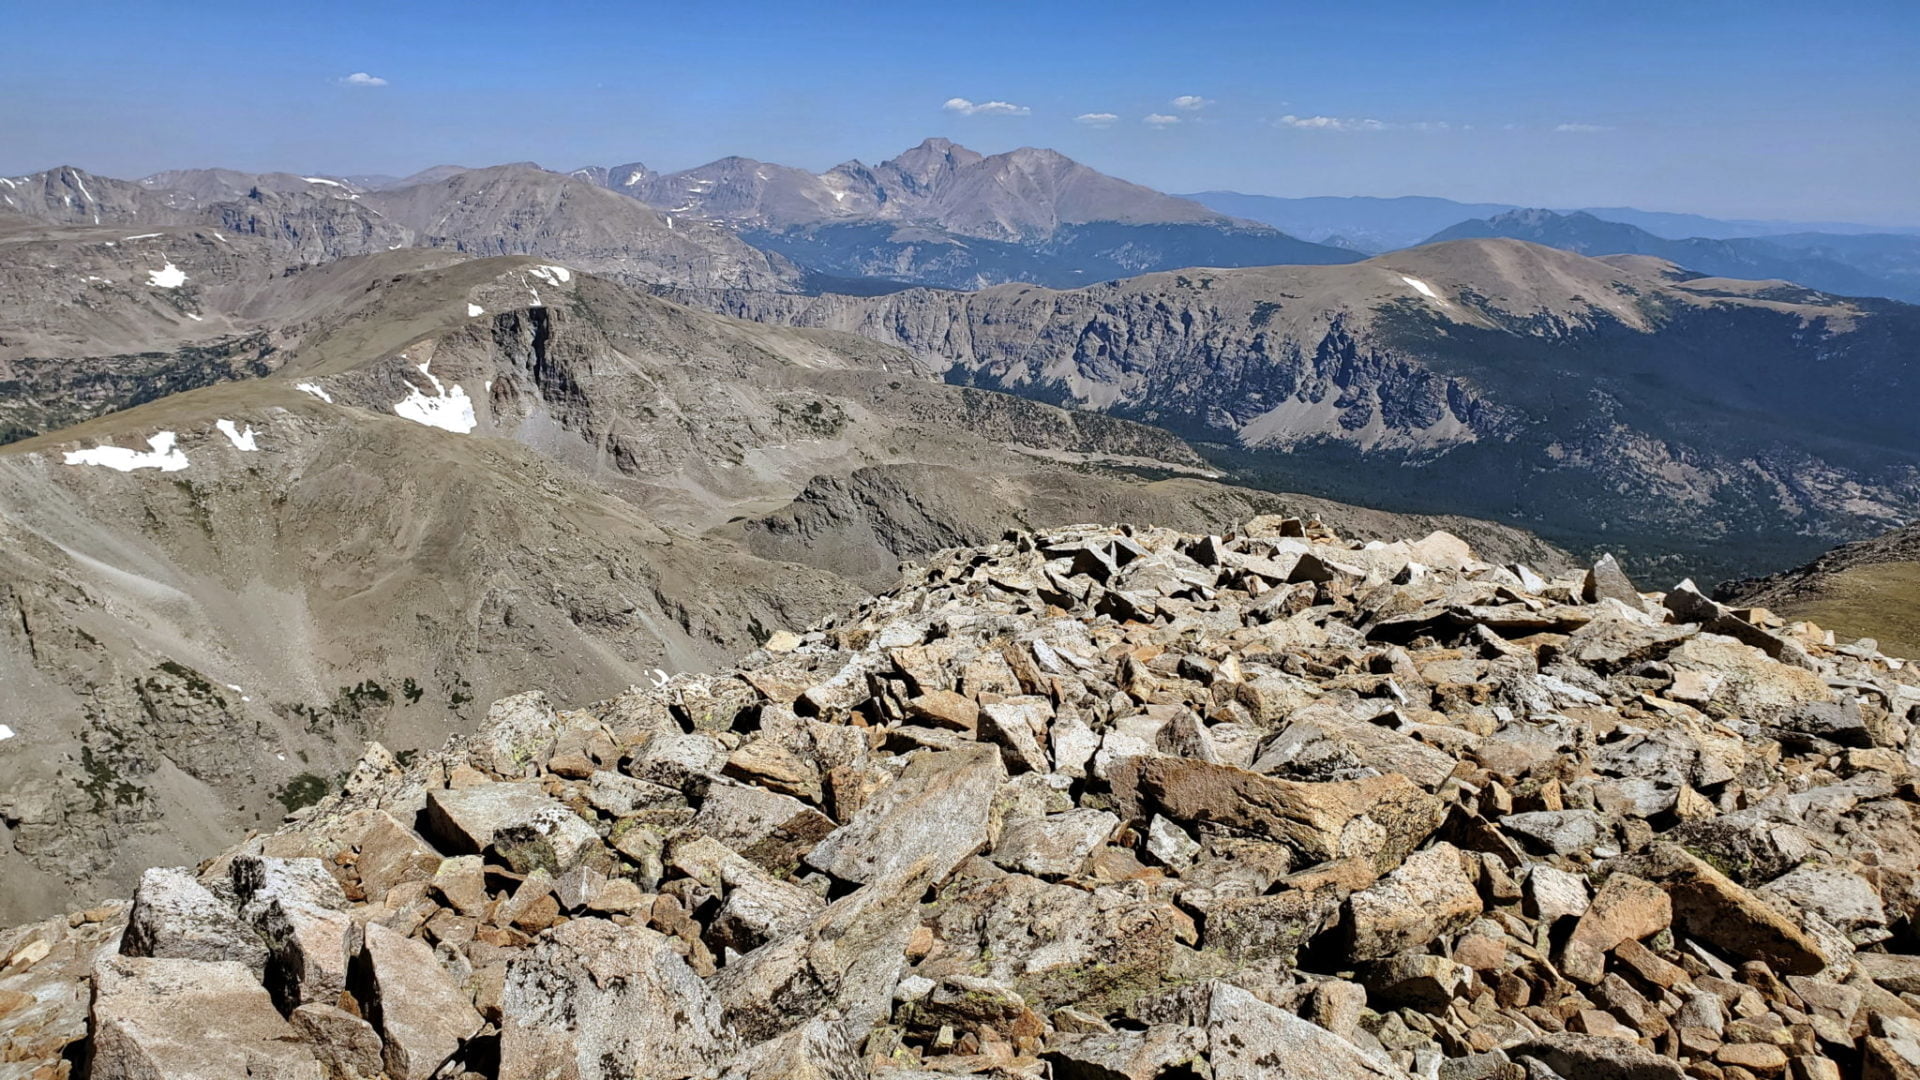 View of Longs Peak in Rocky Mountain National Park